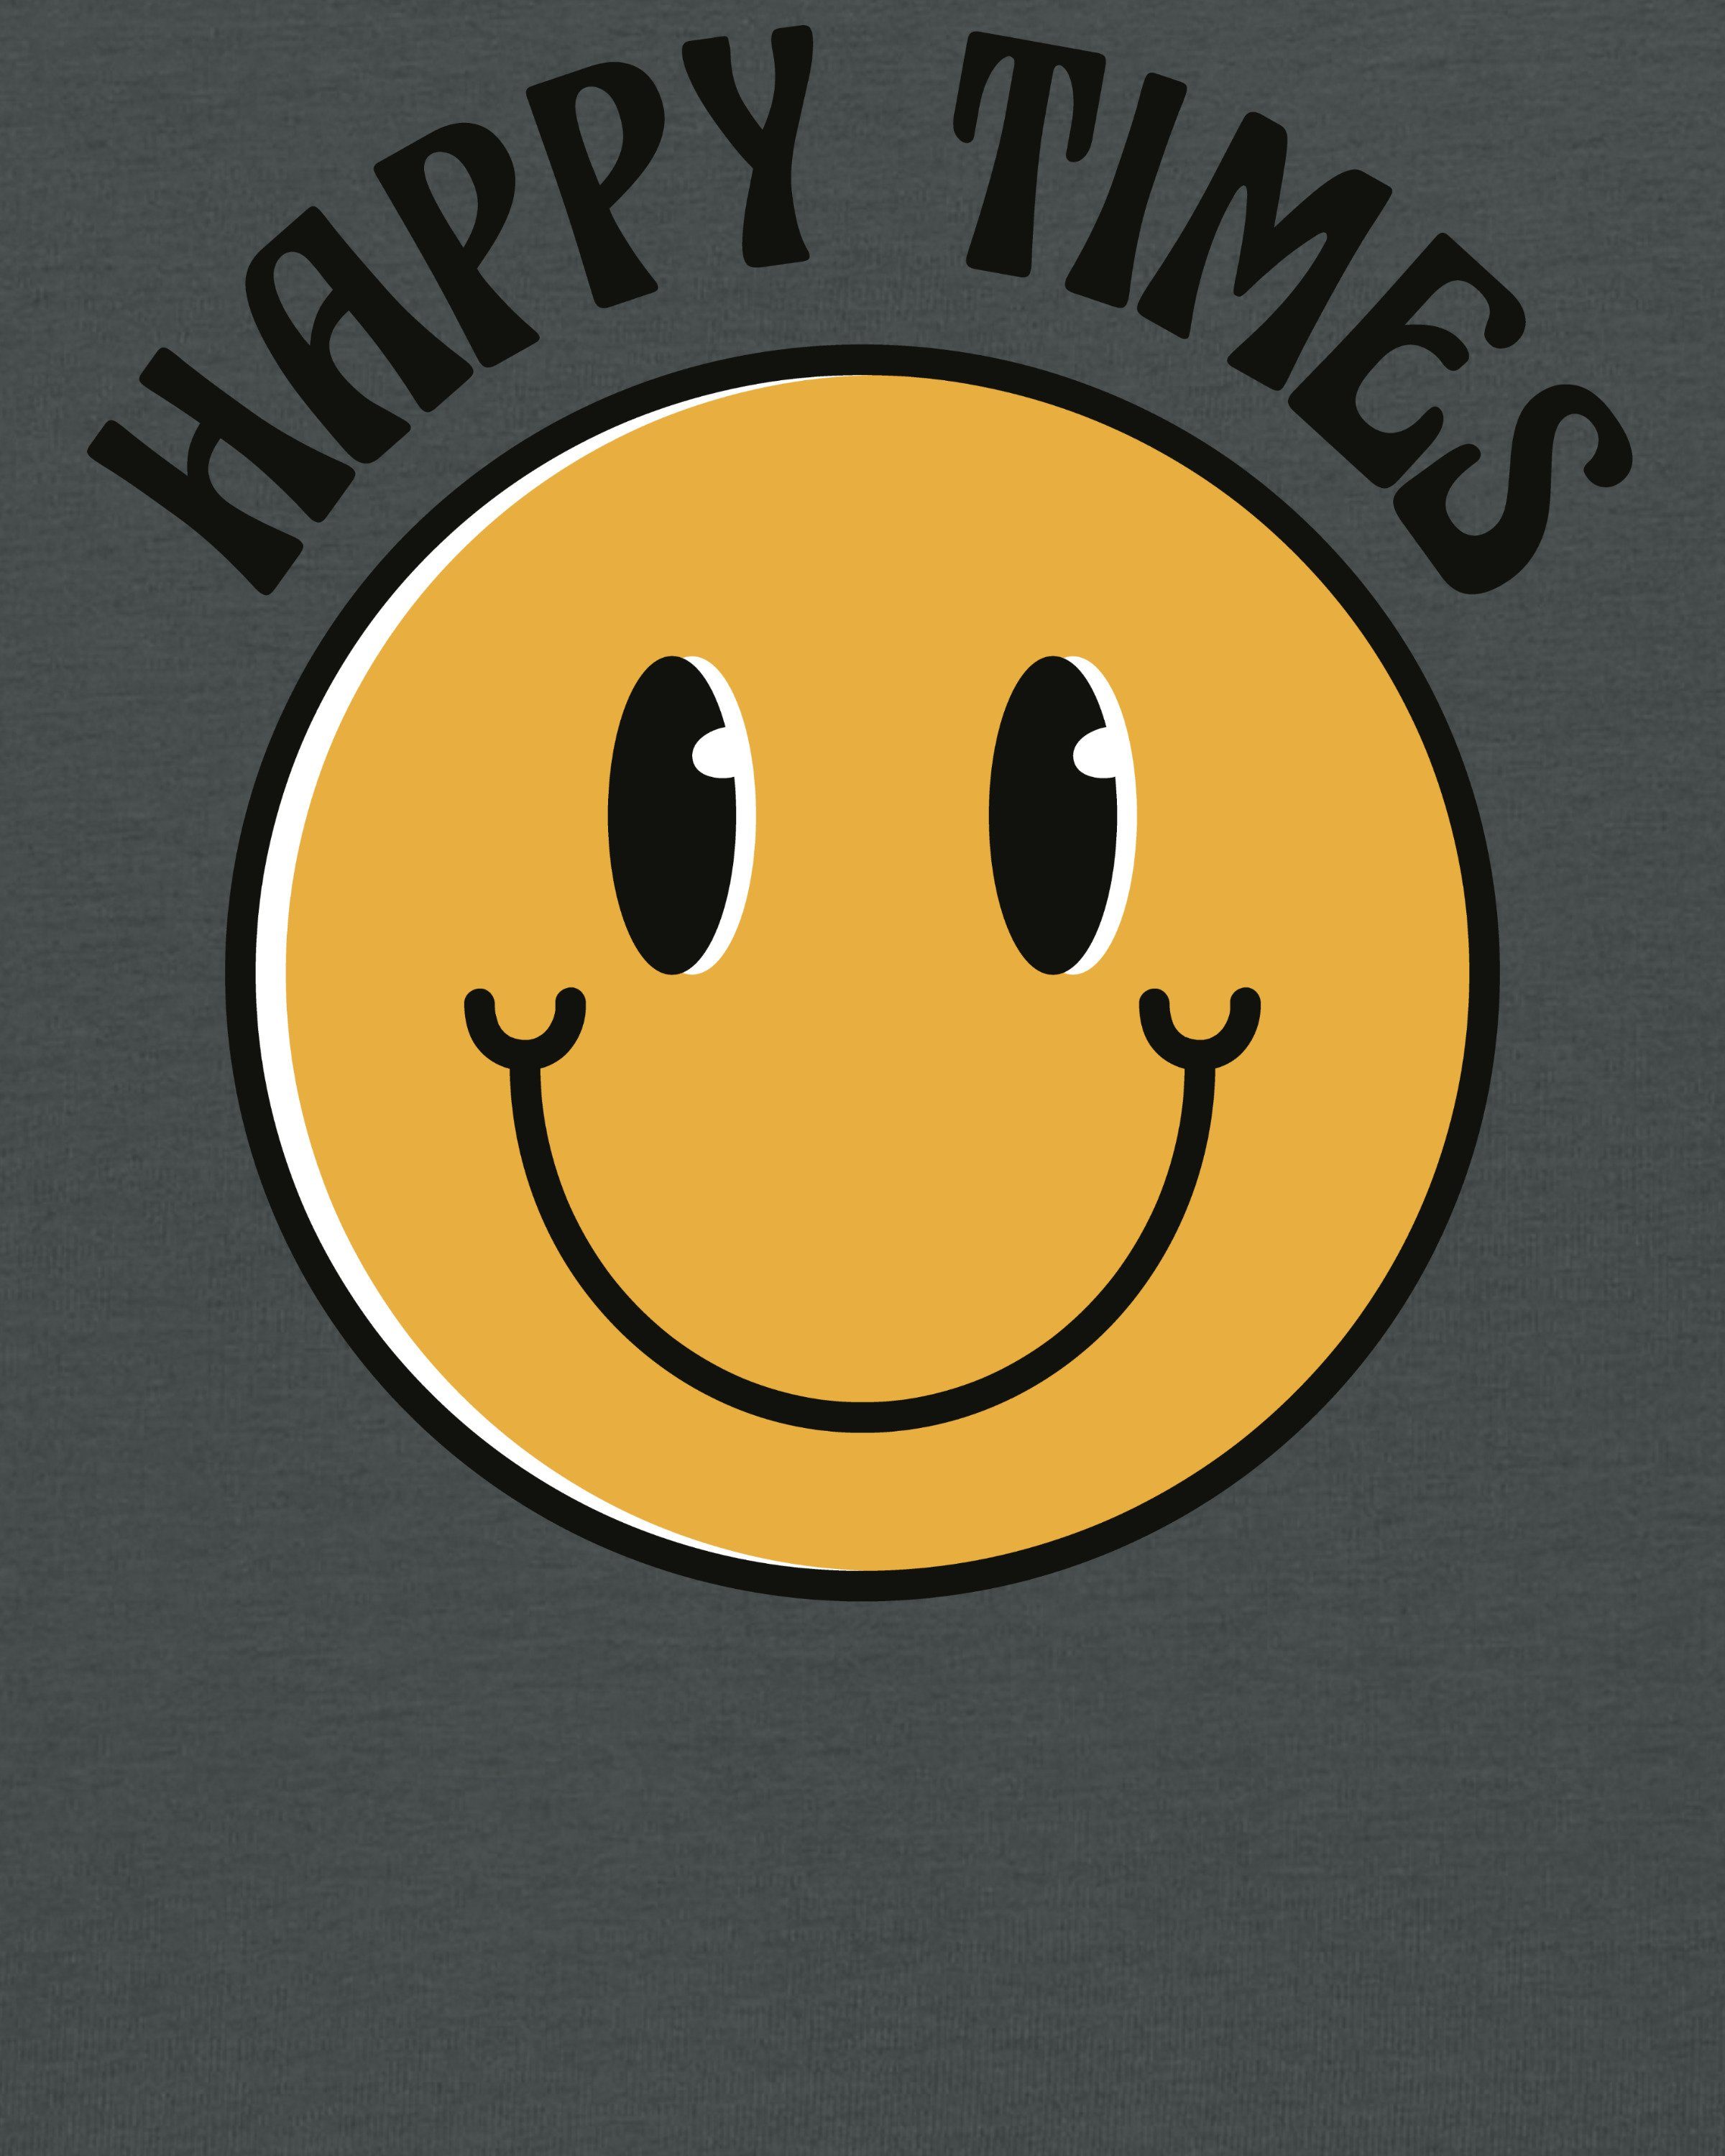 Apparel smiley emoji antrazit (1-tlg) wat? times Happy Print-Shirt